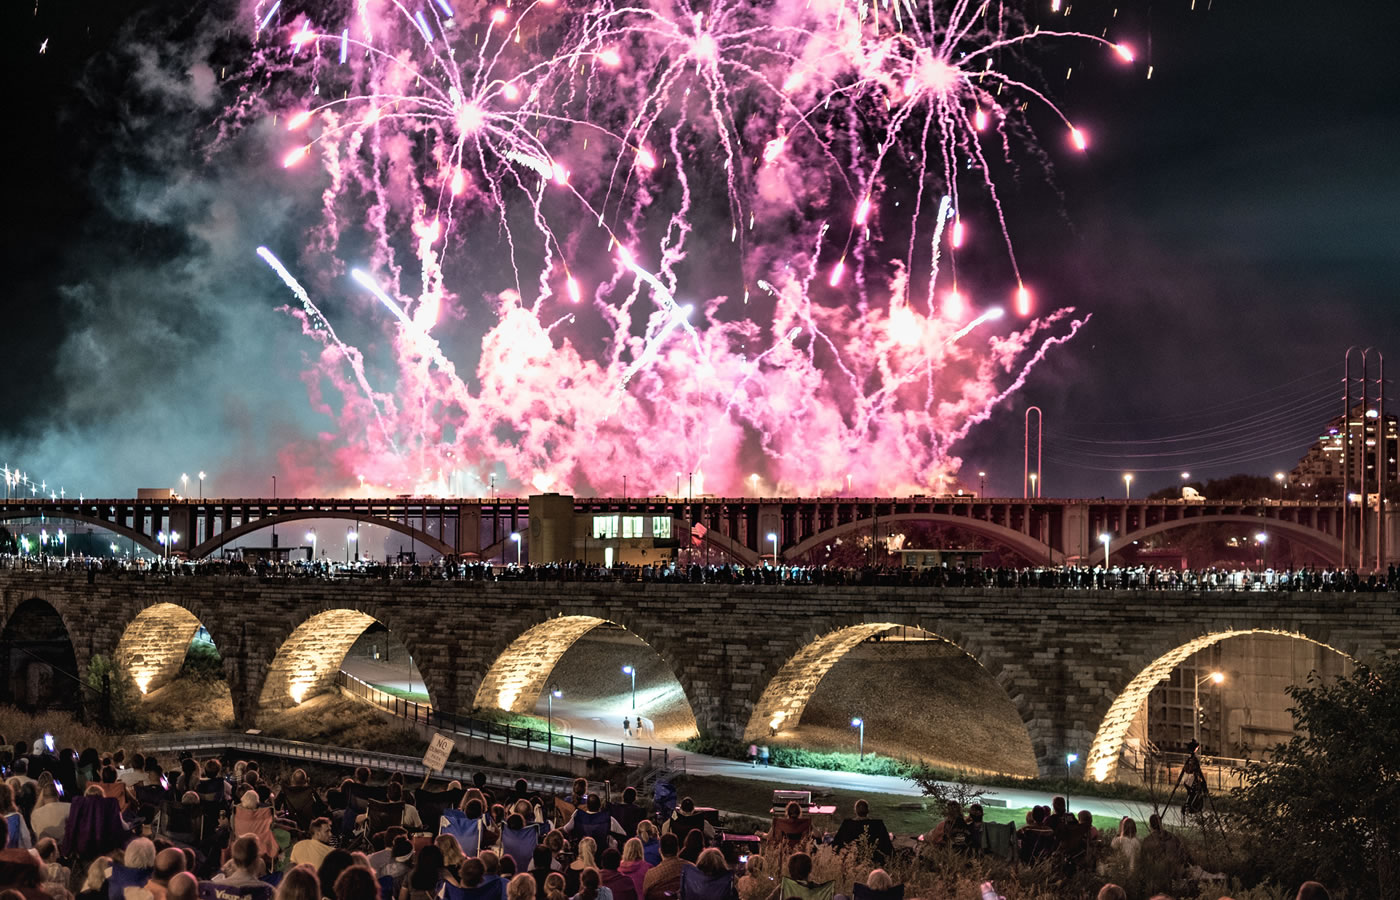 Minneapolis Aquatennial fireworks show over the Stone Arch Bridge. (Source: Mac H (media601) on Flickr)